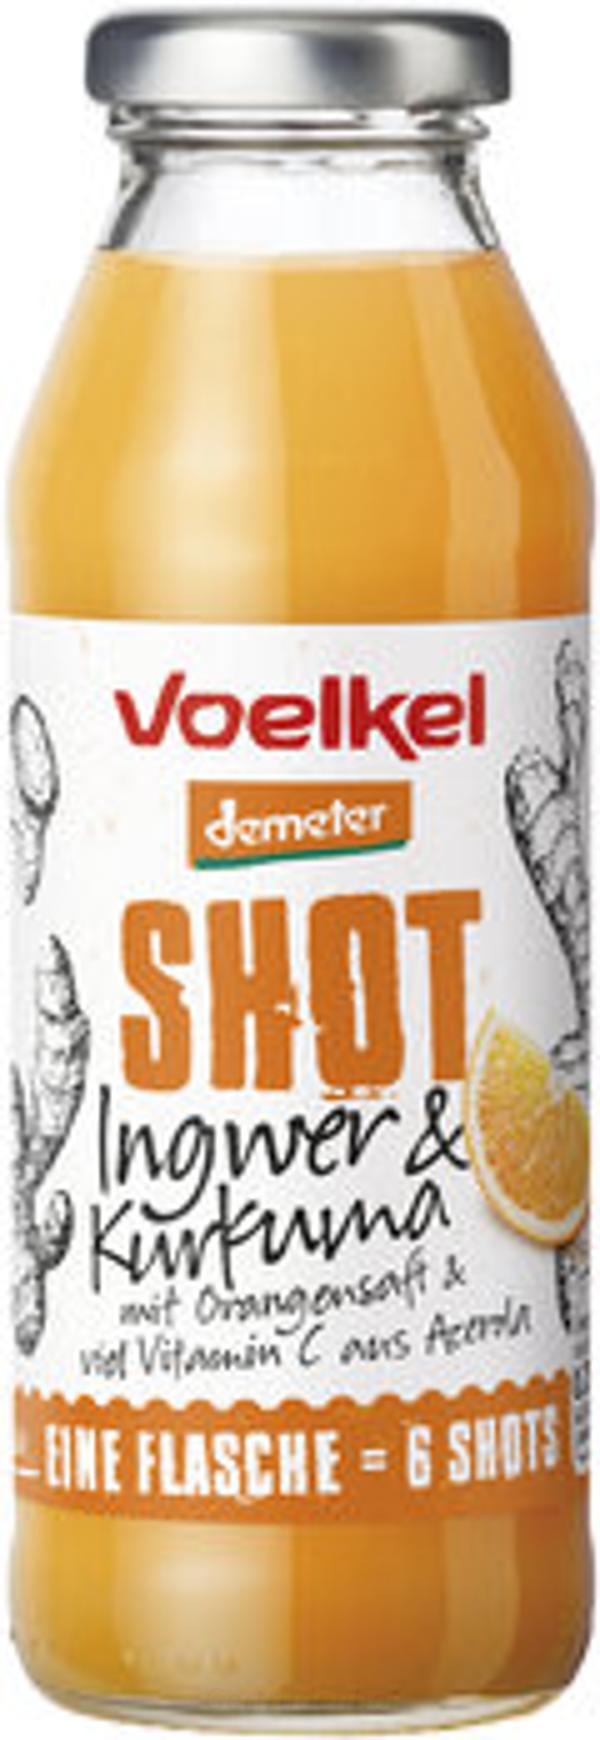 Produktfoto zu Shot Ingwer-Kurku 0,28 L VOE